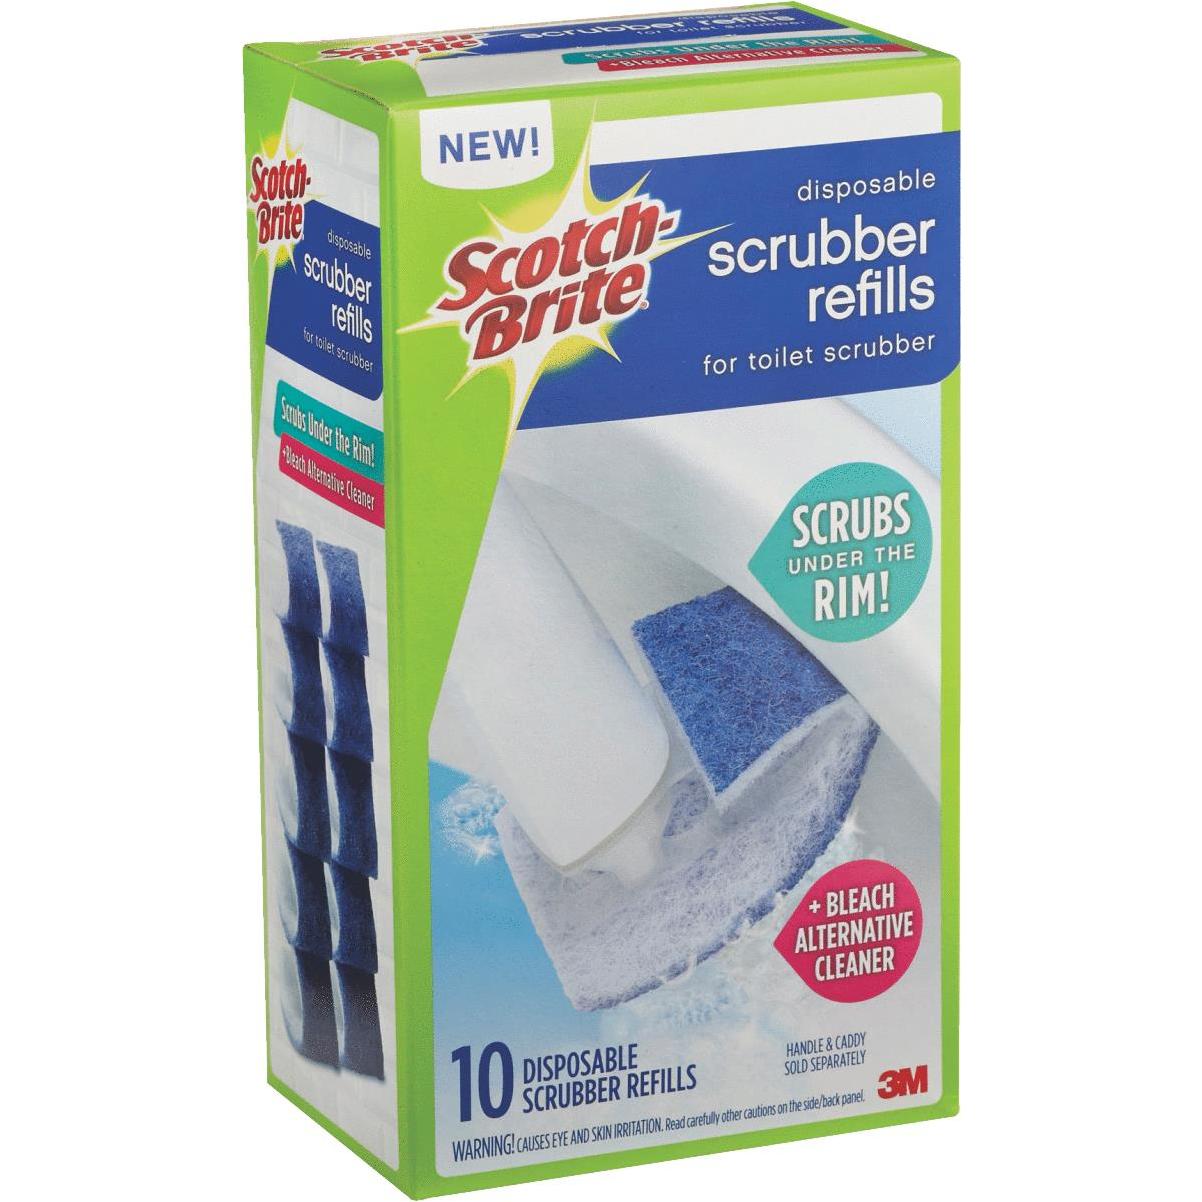  Scotch-Brite Disposable Toilet Scrubber Refills